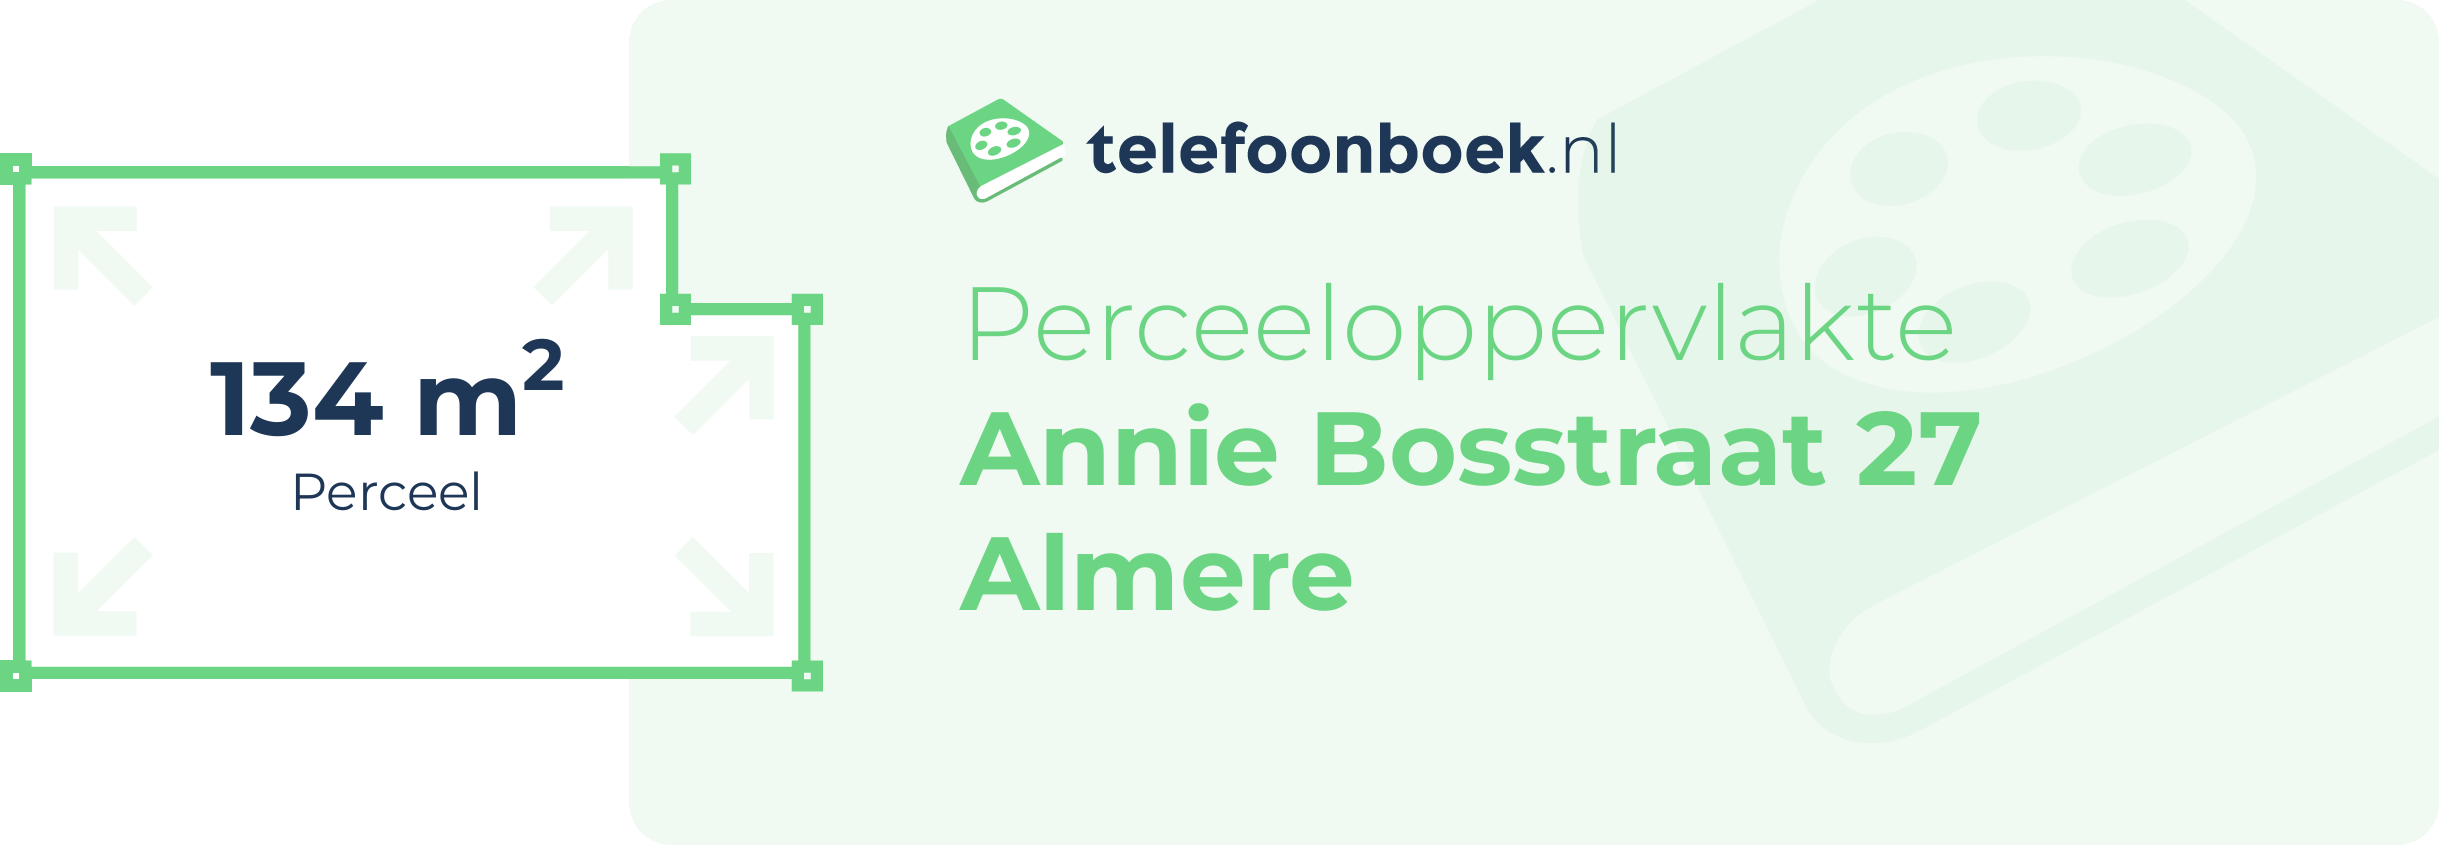 Perceeloppervlakte Annie Bosstraat 27 Almere